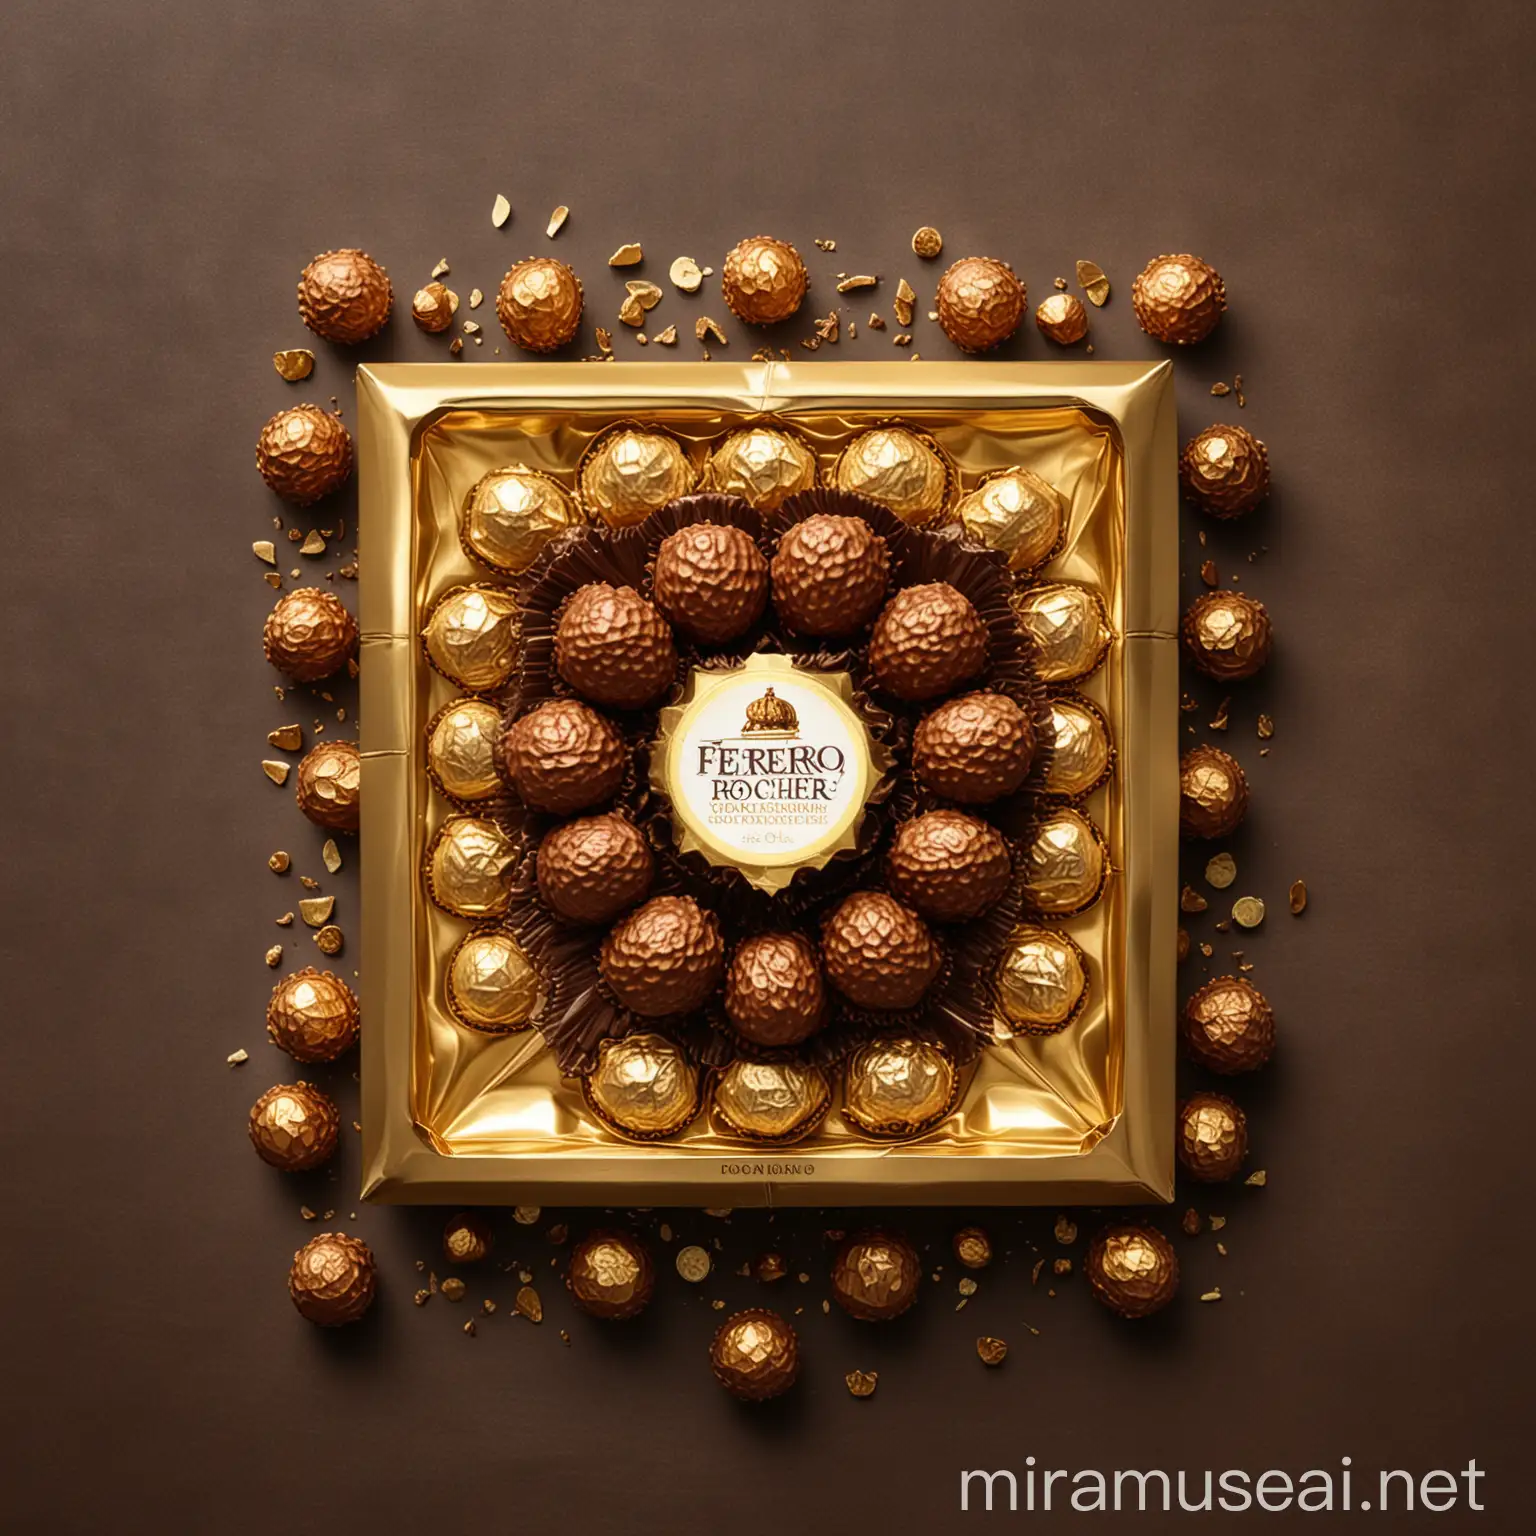 Elegant Chocolate Treats Sophisticated Dessert Photography for Ferrero Rocher Social Media Promotion